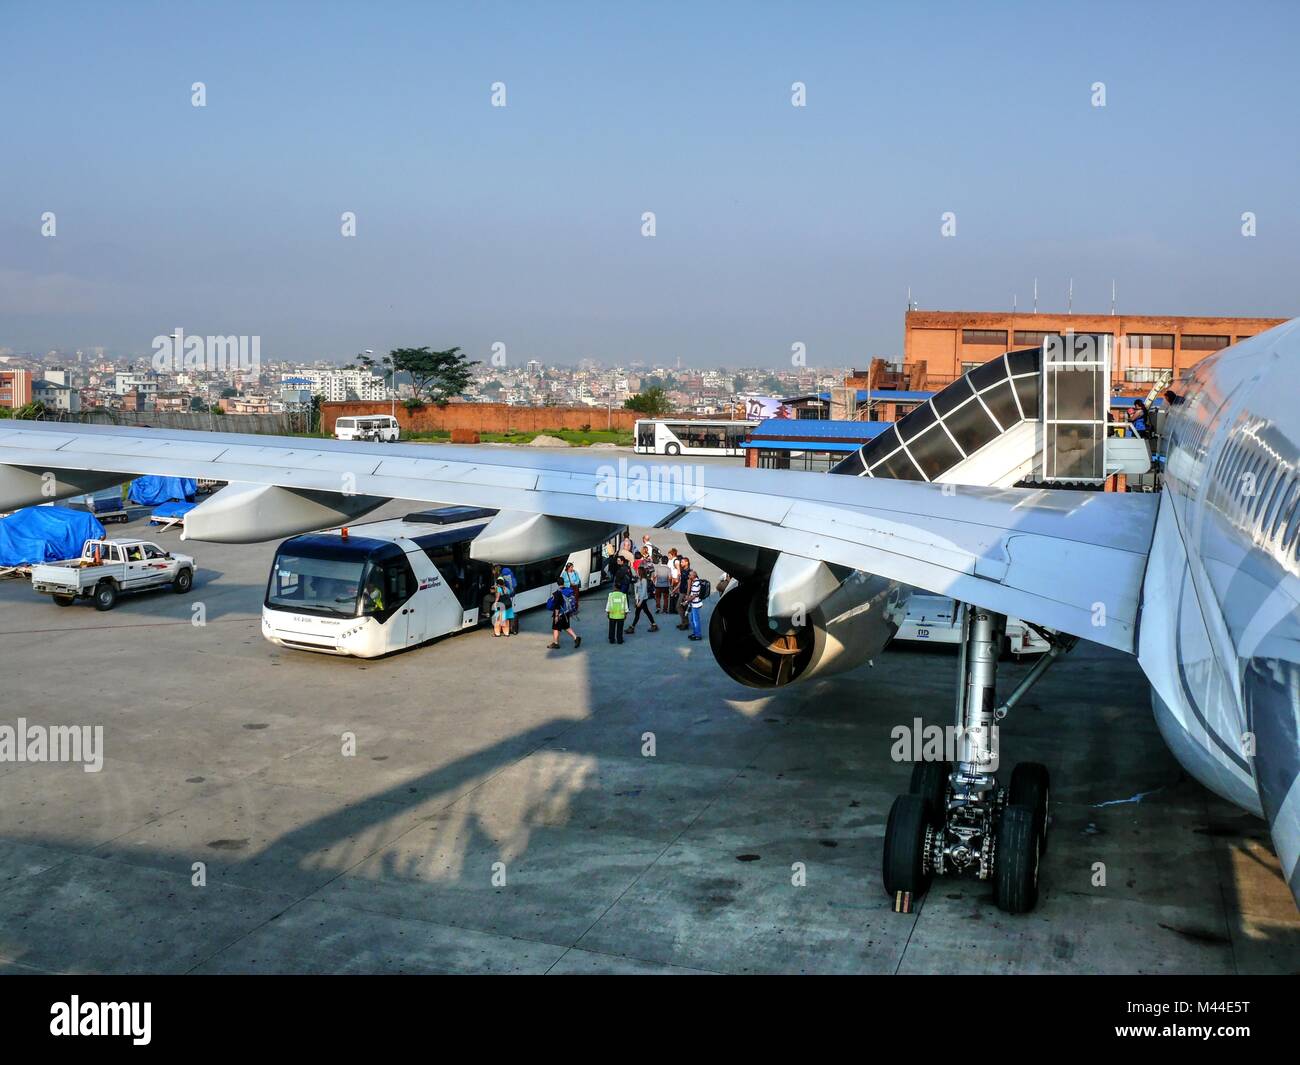 Tribhuvan International Airport - Kathmandu, Nepal, september 6, 2013: Passengers exit the plane after land. Stock Photo